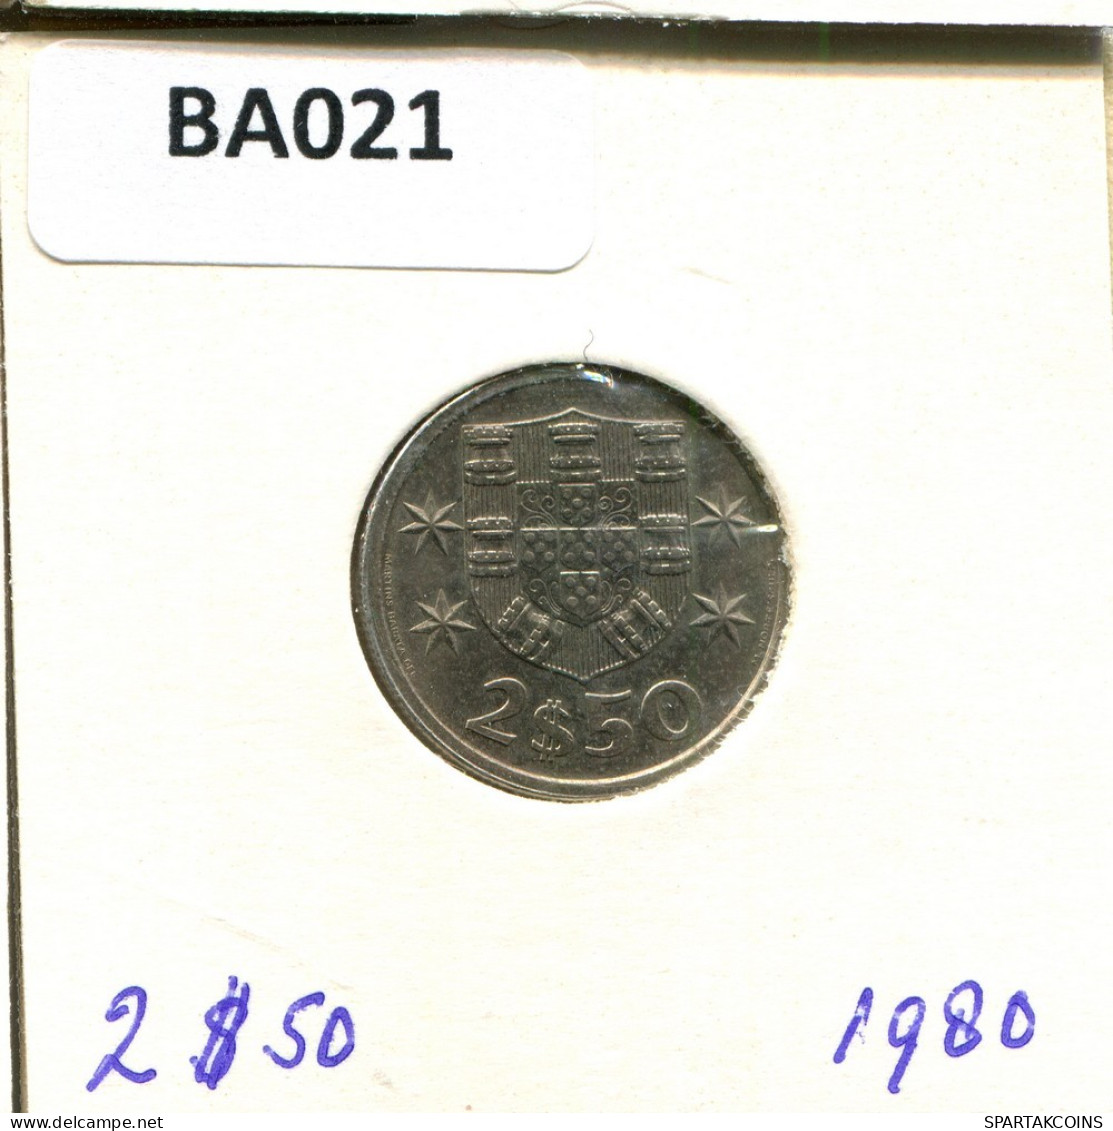 2 $ 50 ESCUDOS 1980 PORTUGAL Coin #BA021.U.A - Portugal